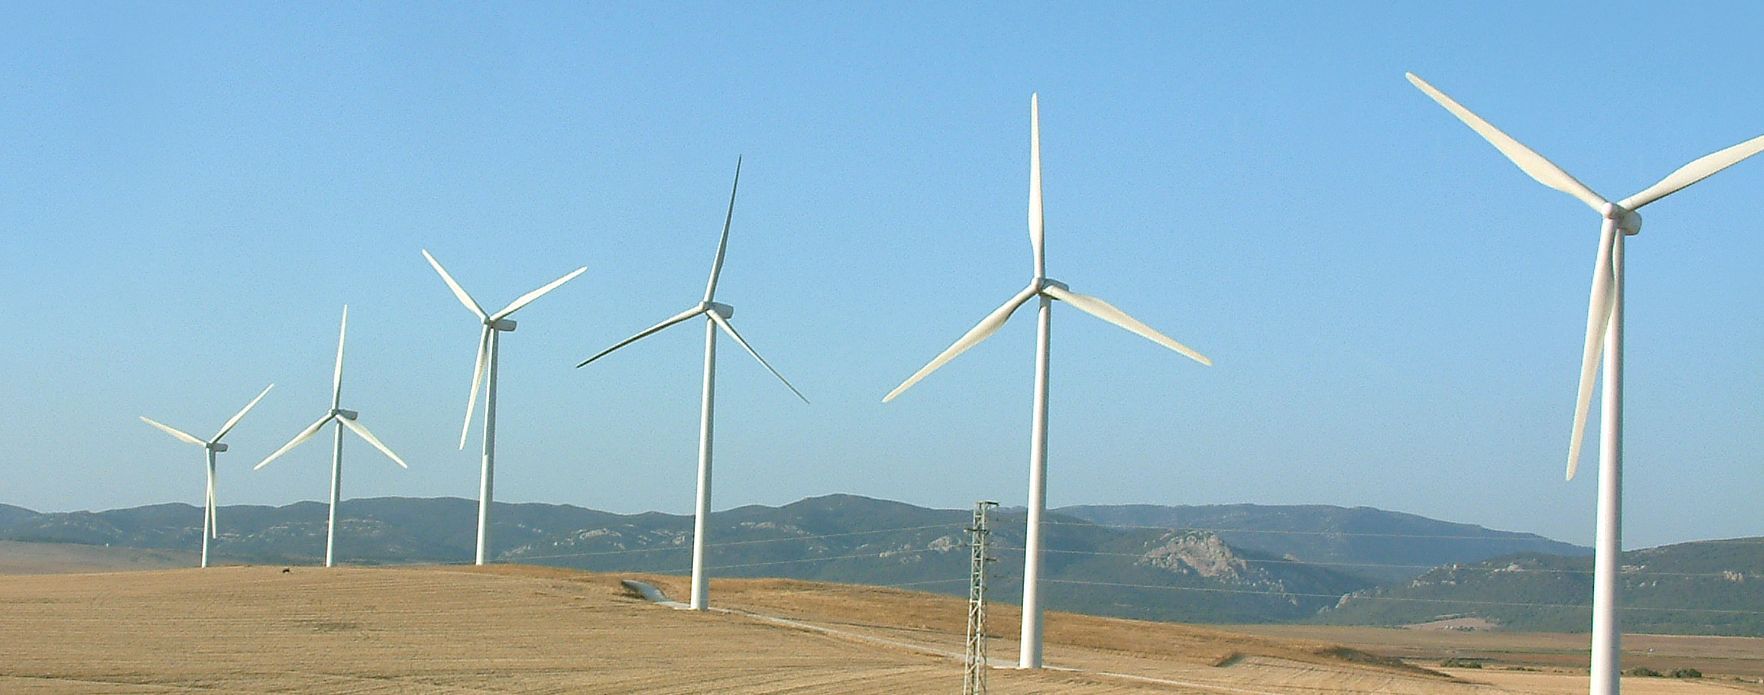 AleaSoft - Wind energy